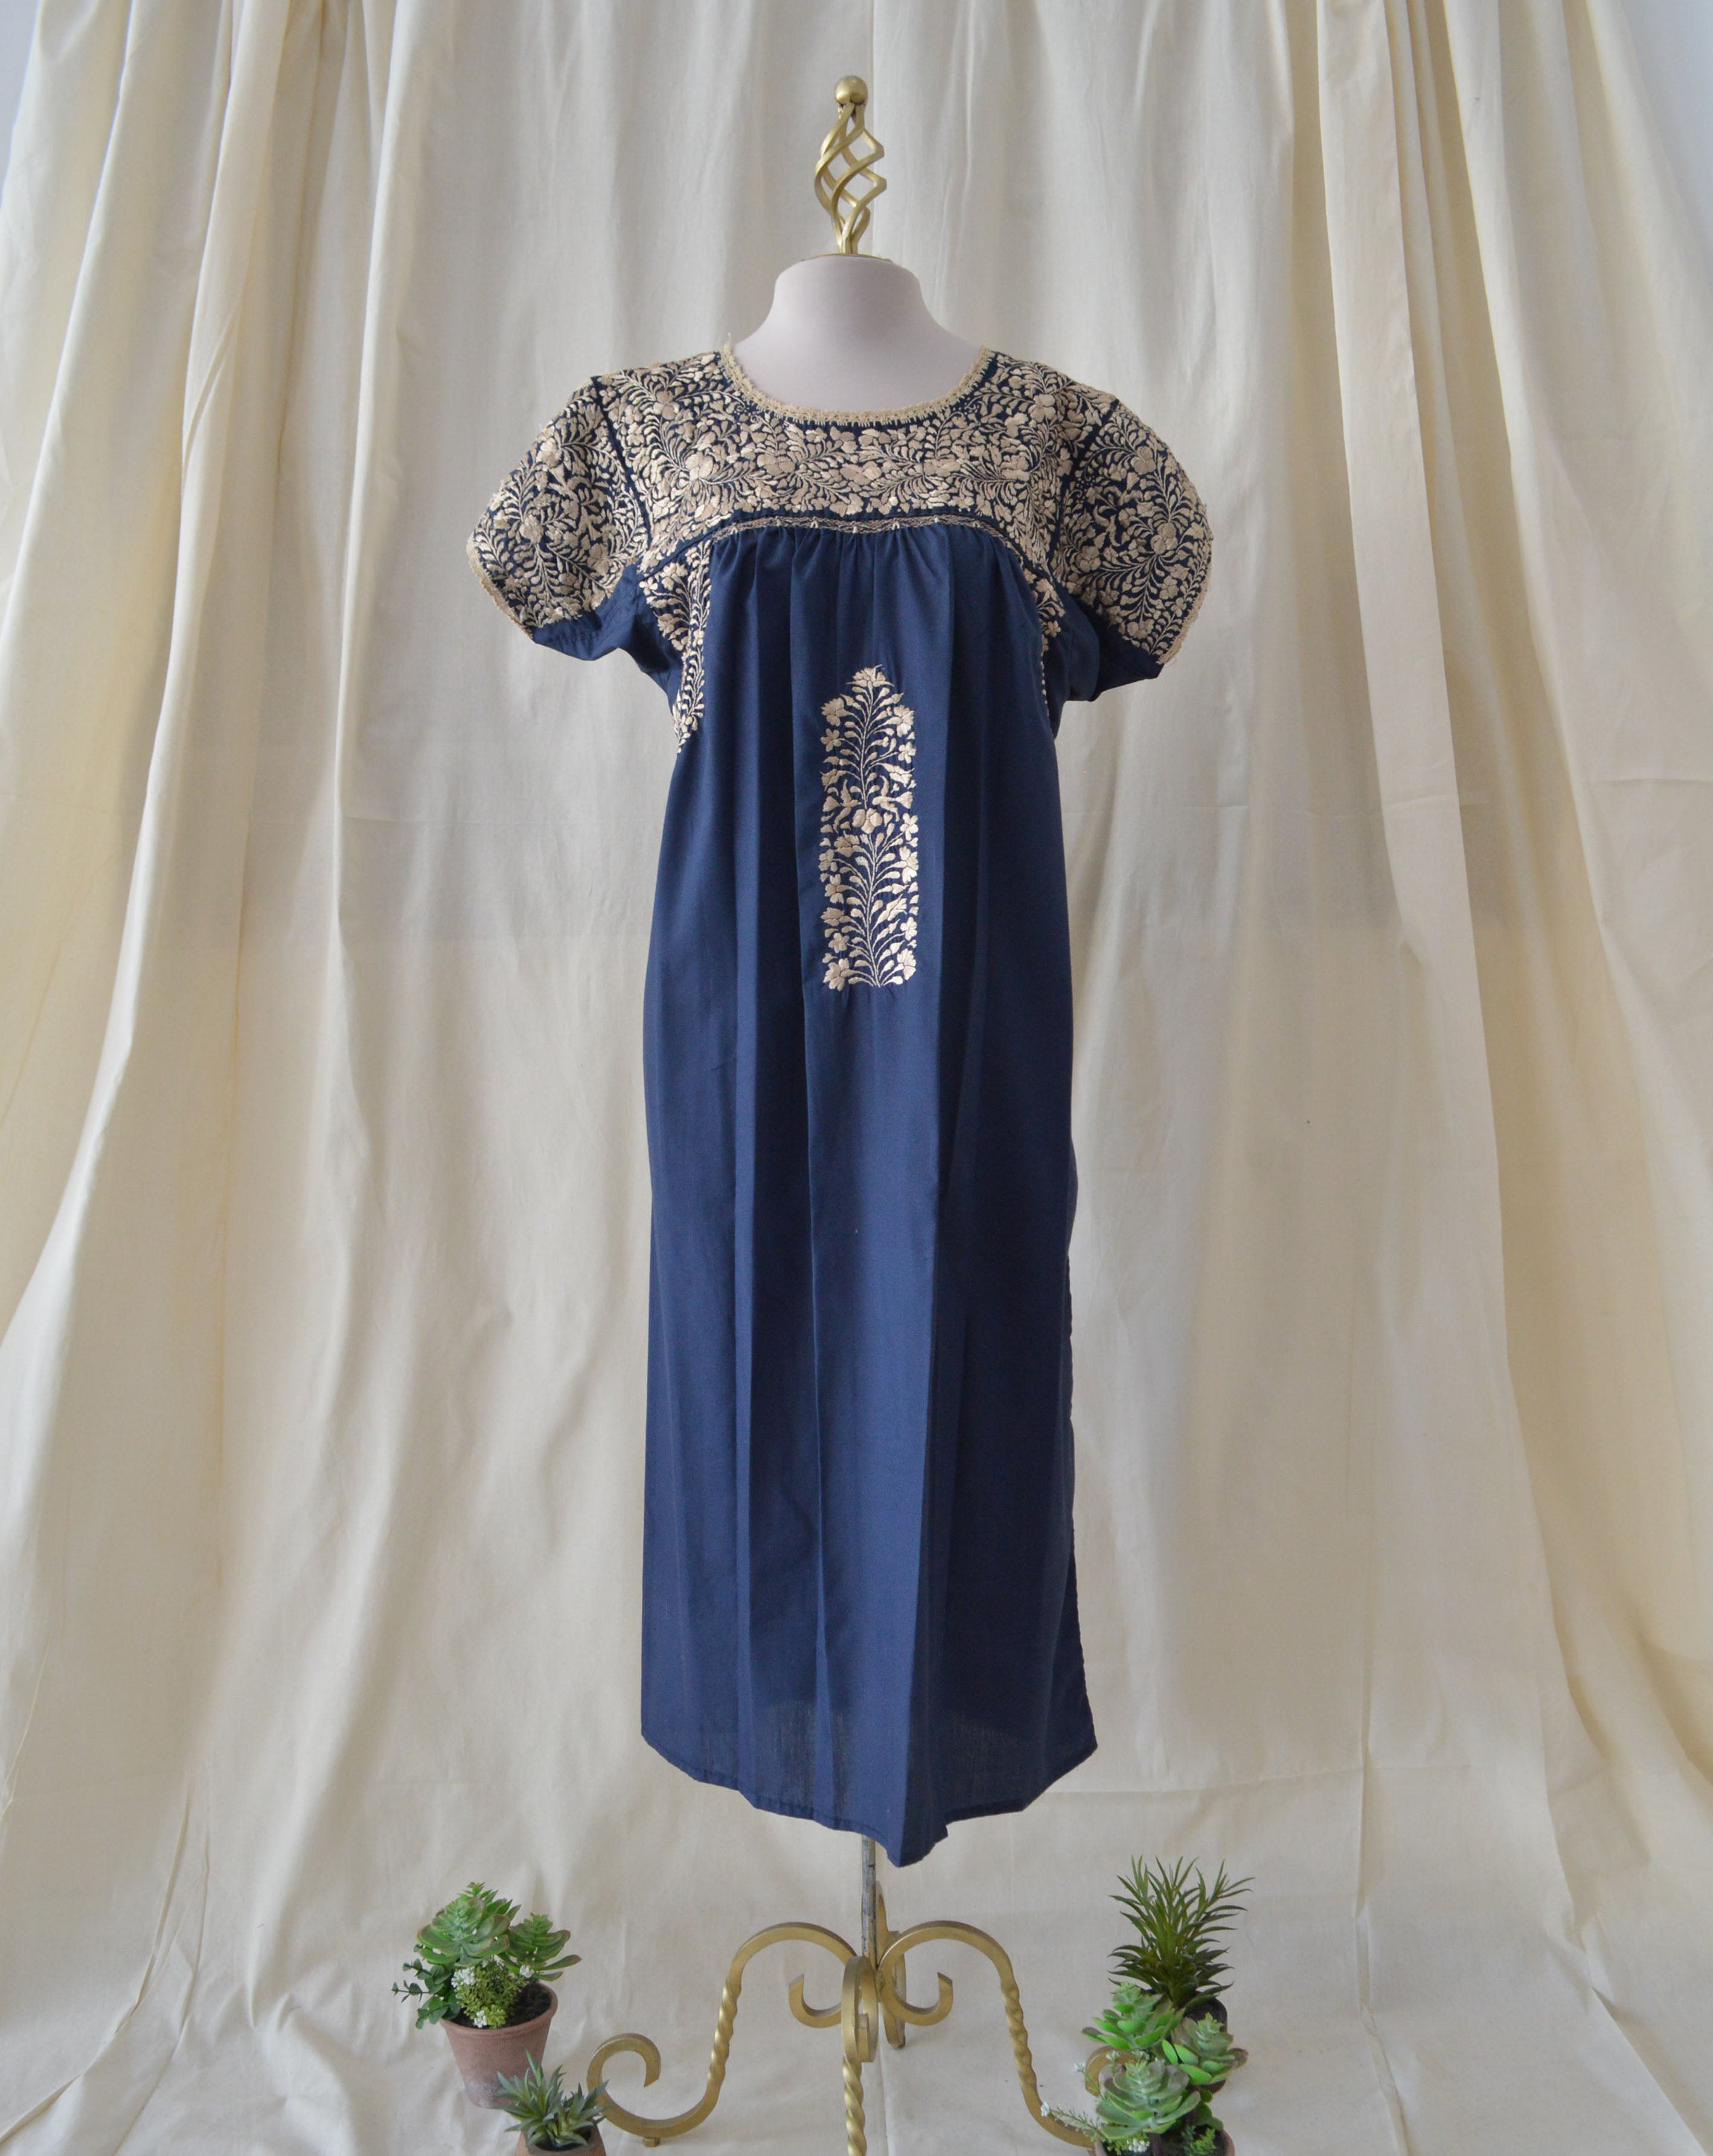 Vestido San Antonino azul marino con dorado / G